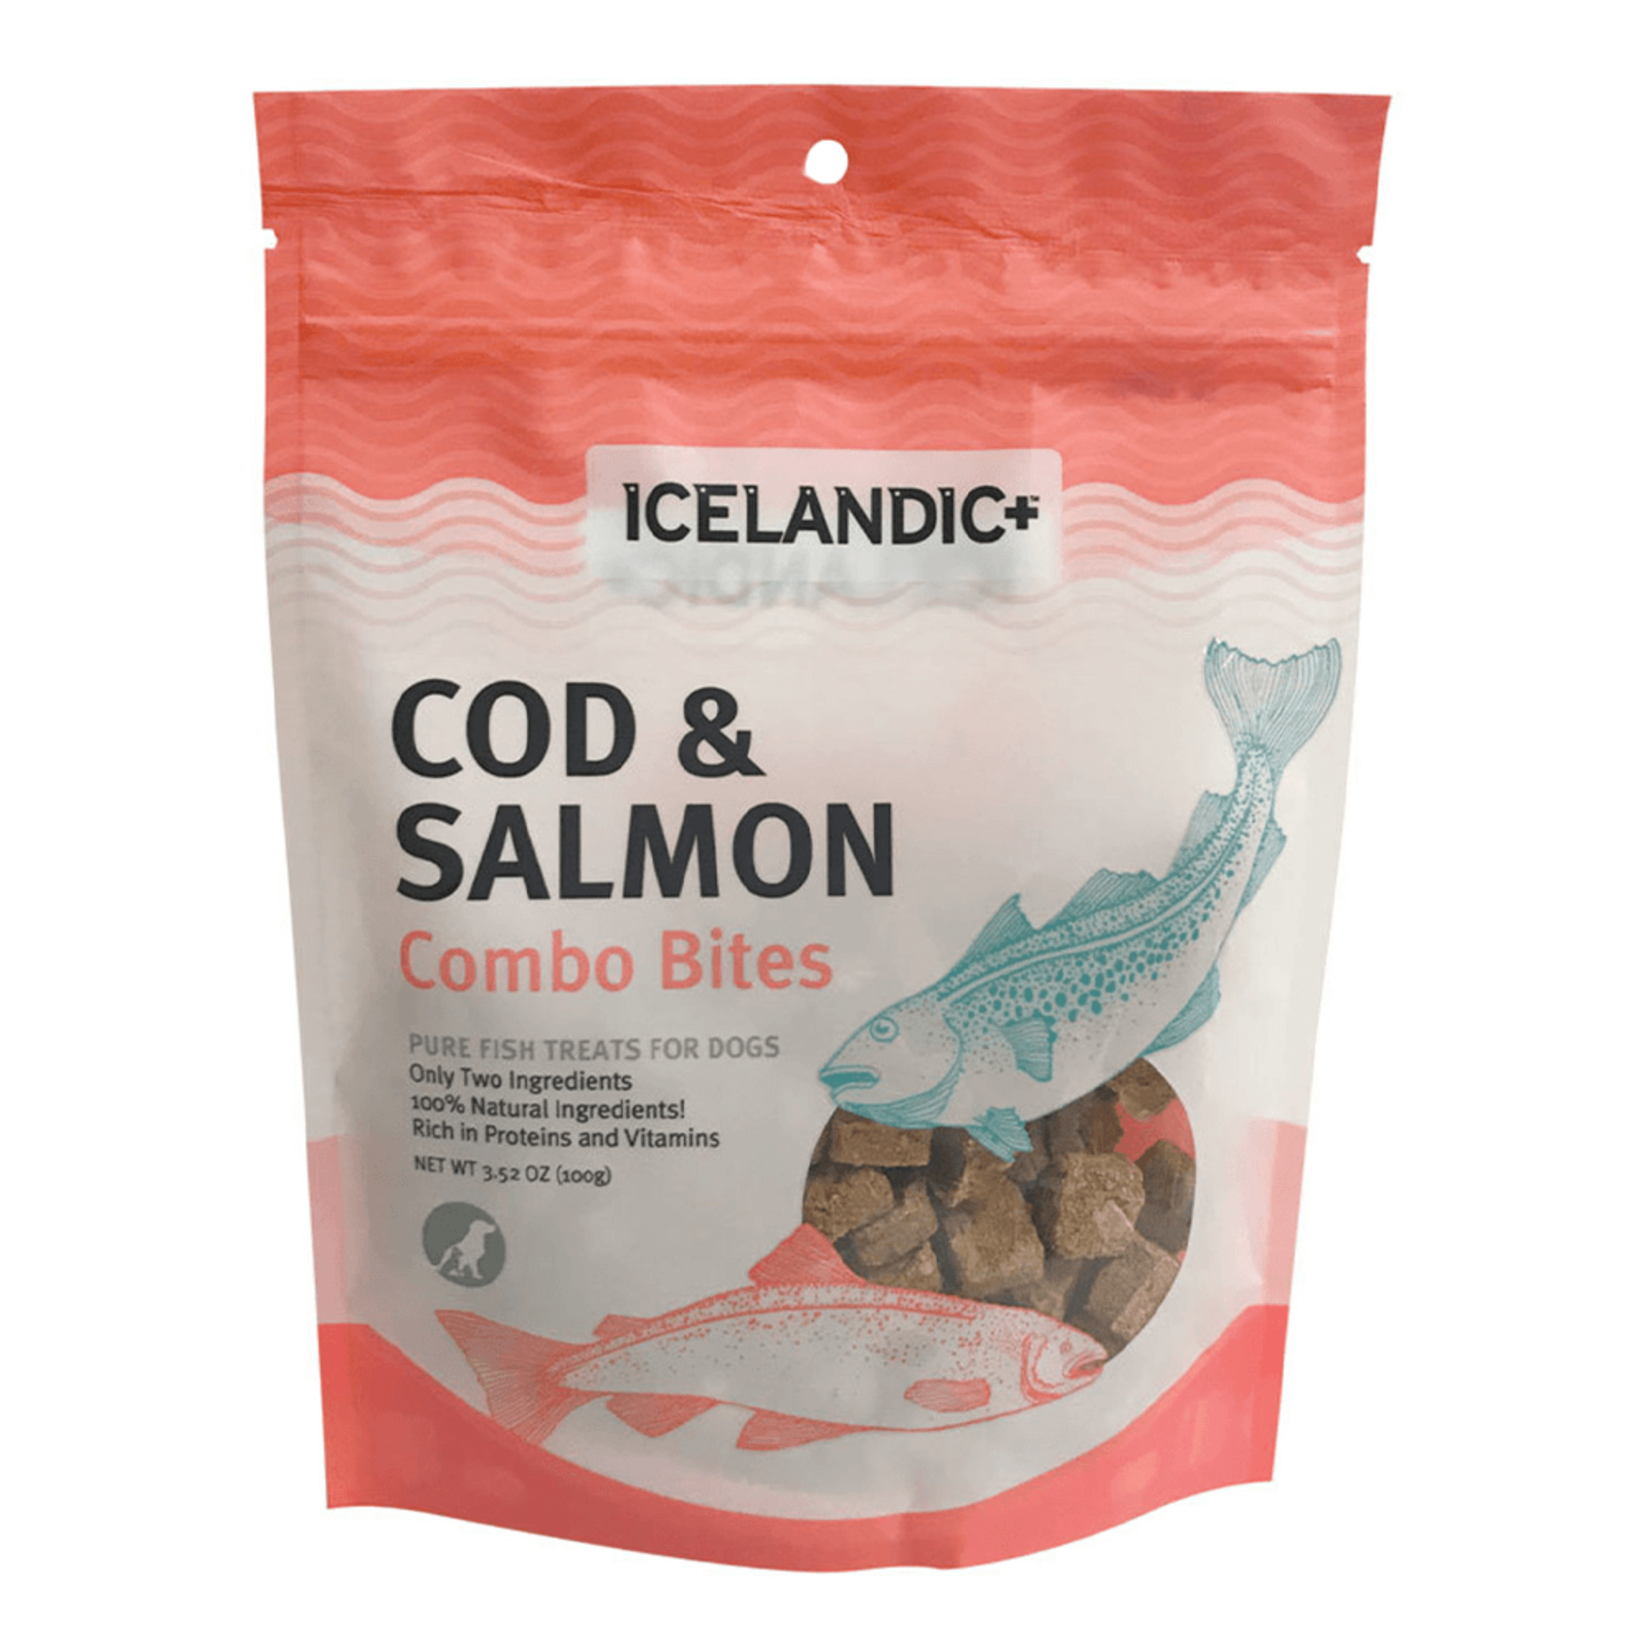 1 Net Icelandic+ Icelandic+ Cod & Salmon Combo Bites 3.52 oz